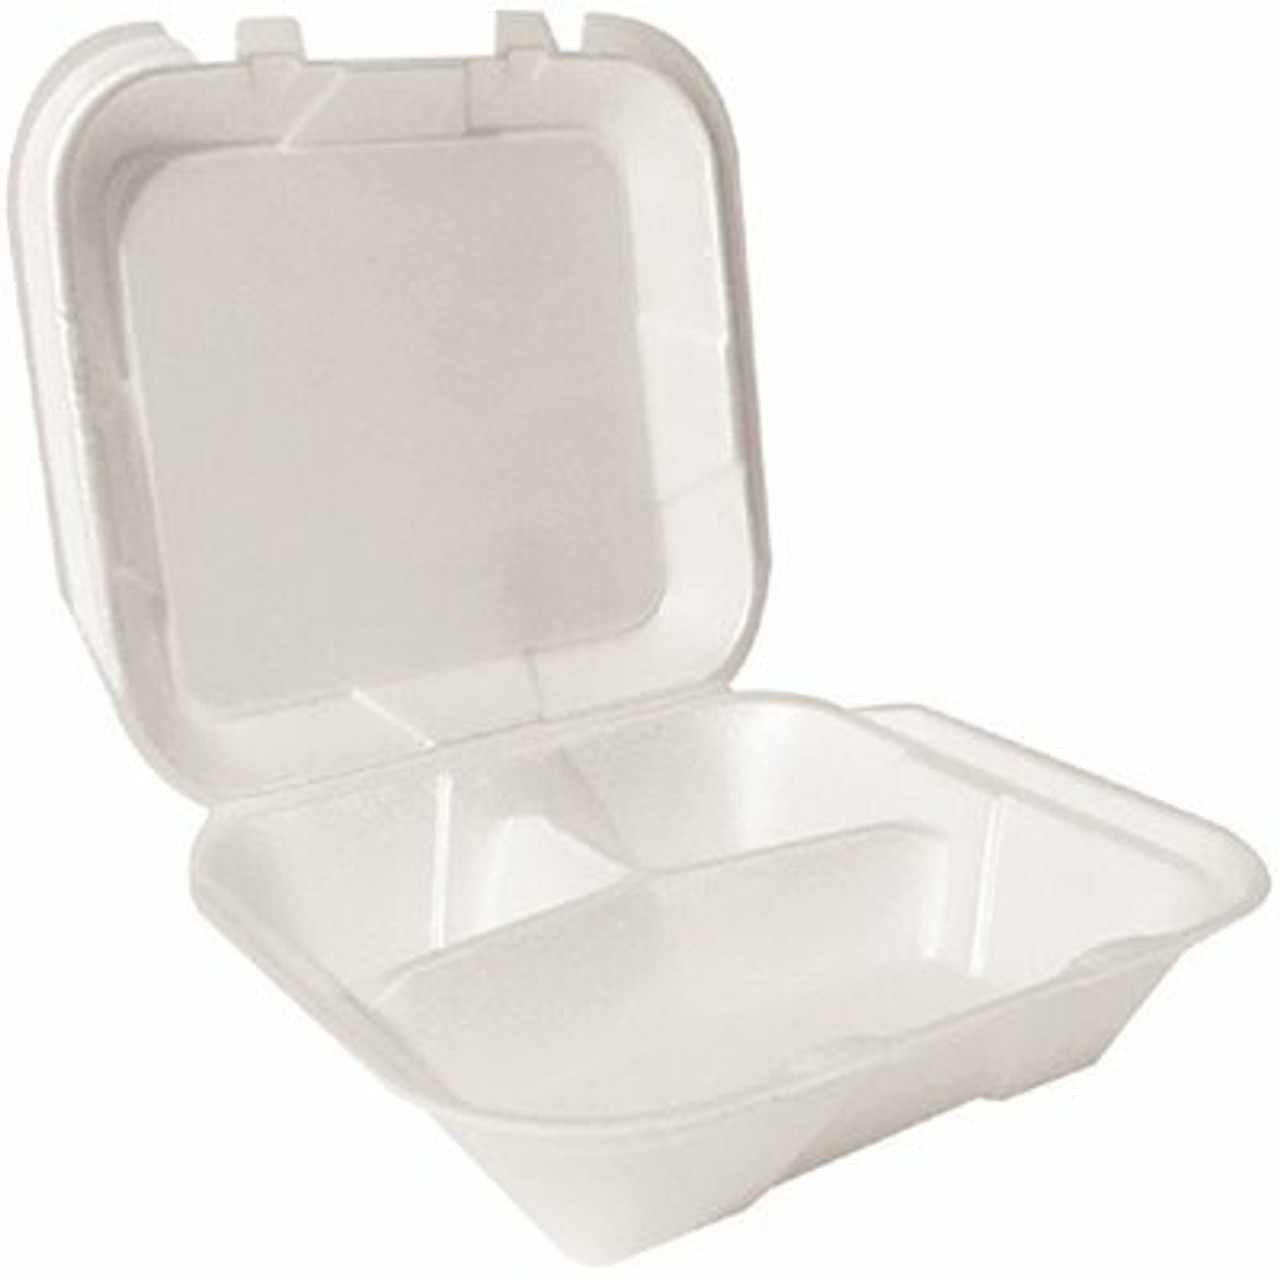 Plastifar 9 In. X 9 In. X 3 In. 3-Compartment Hinged Foam Container, White (200 Per Case)